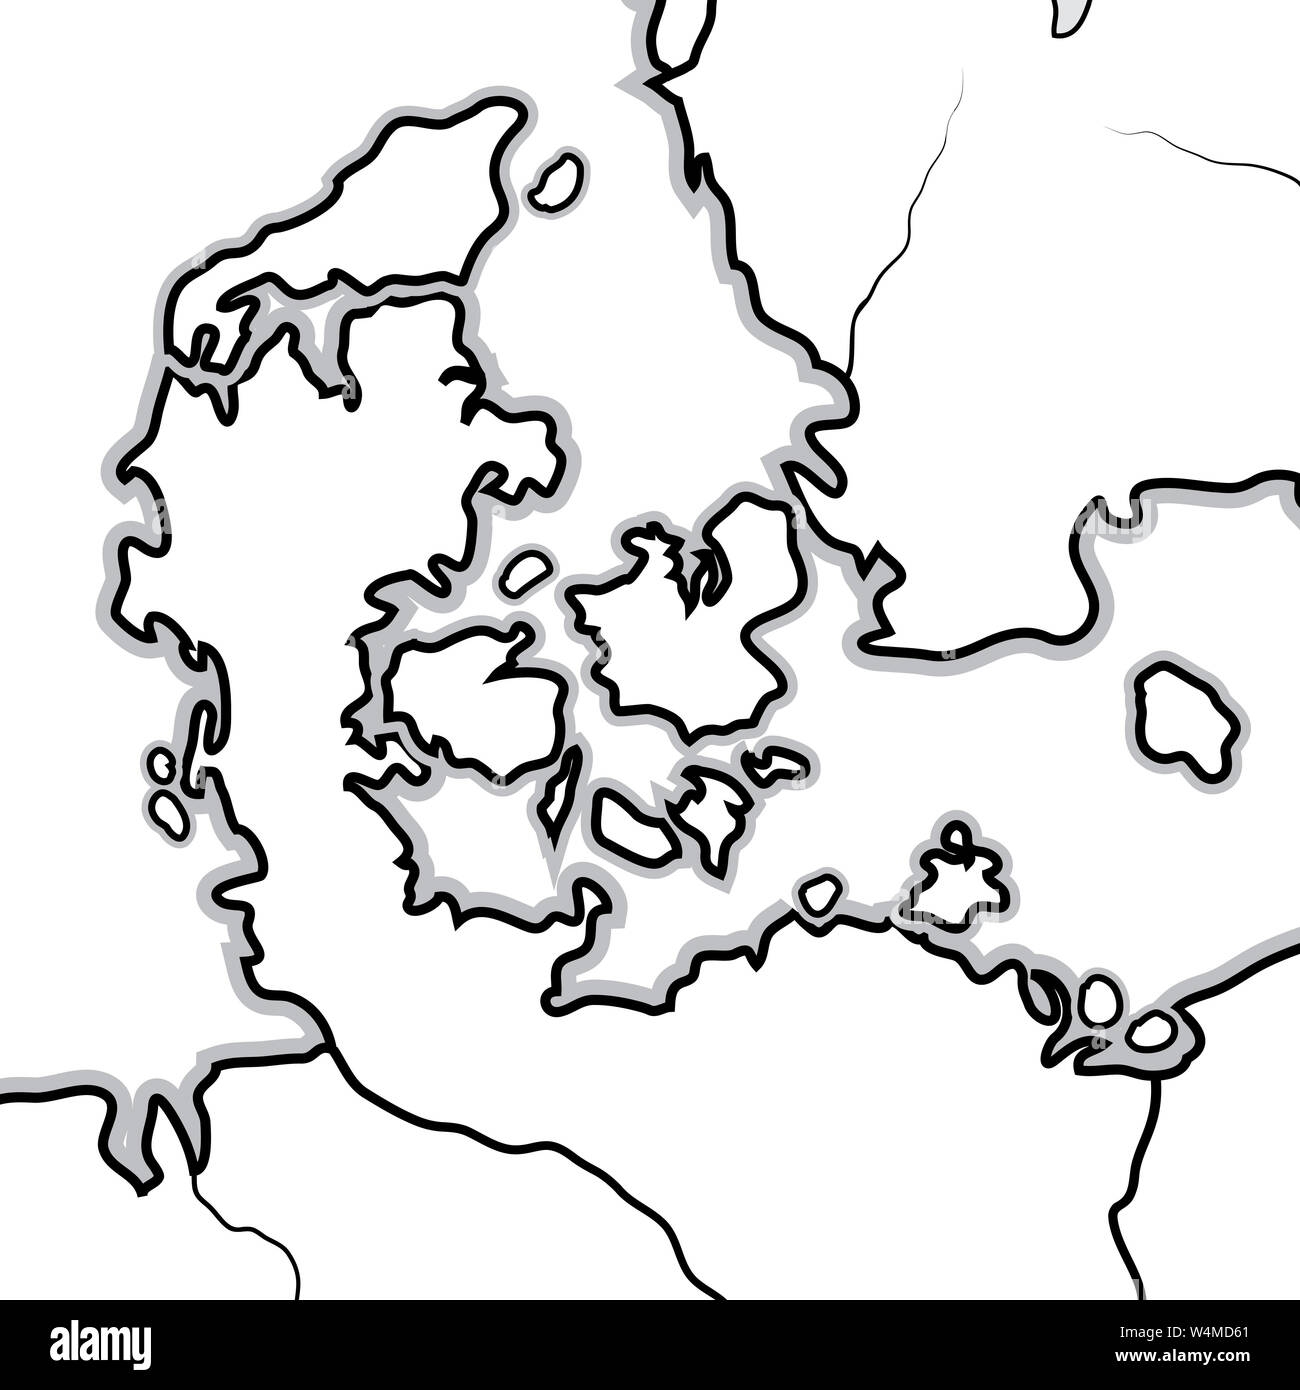 World Map of DENMARK: Denmark, Jutland, Zealand, Scandinavia, North Europe, North Sea. Geographic chart with sea coastline and islands. Stock Photo